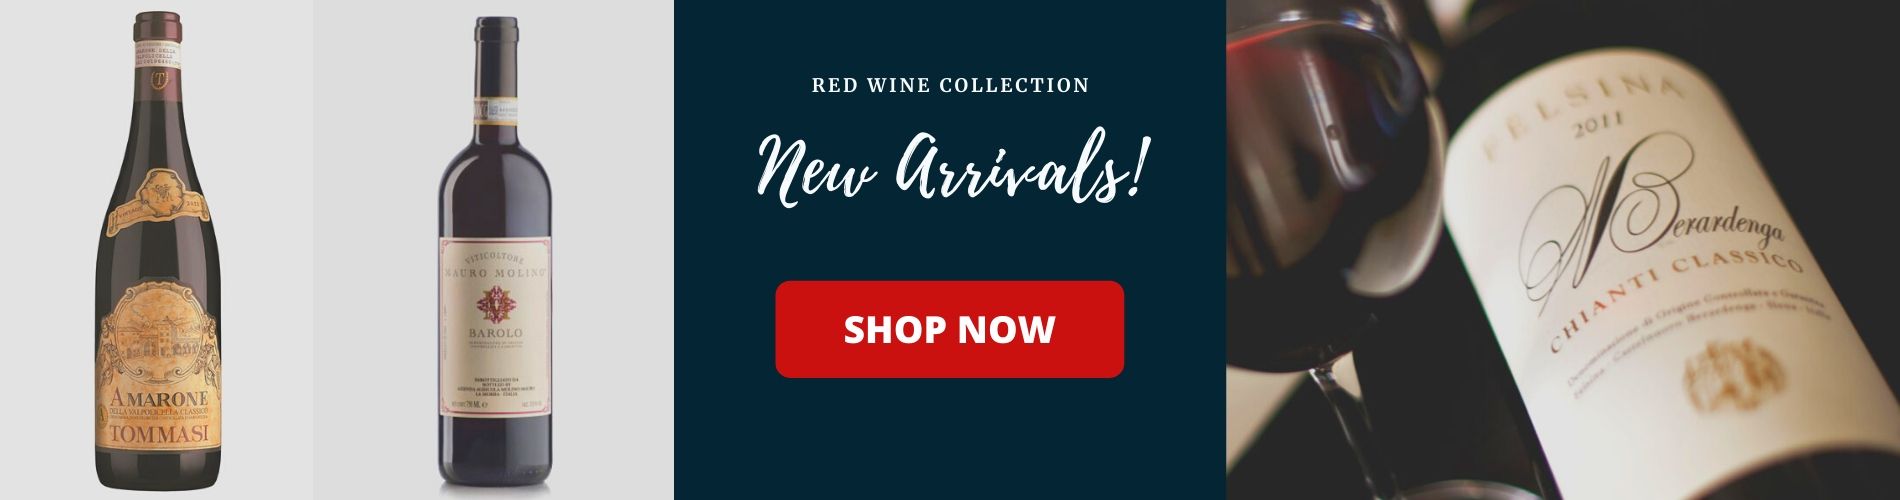 New Arrivals Wine